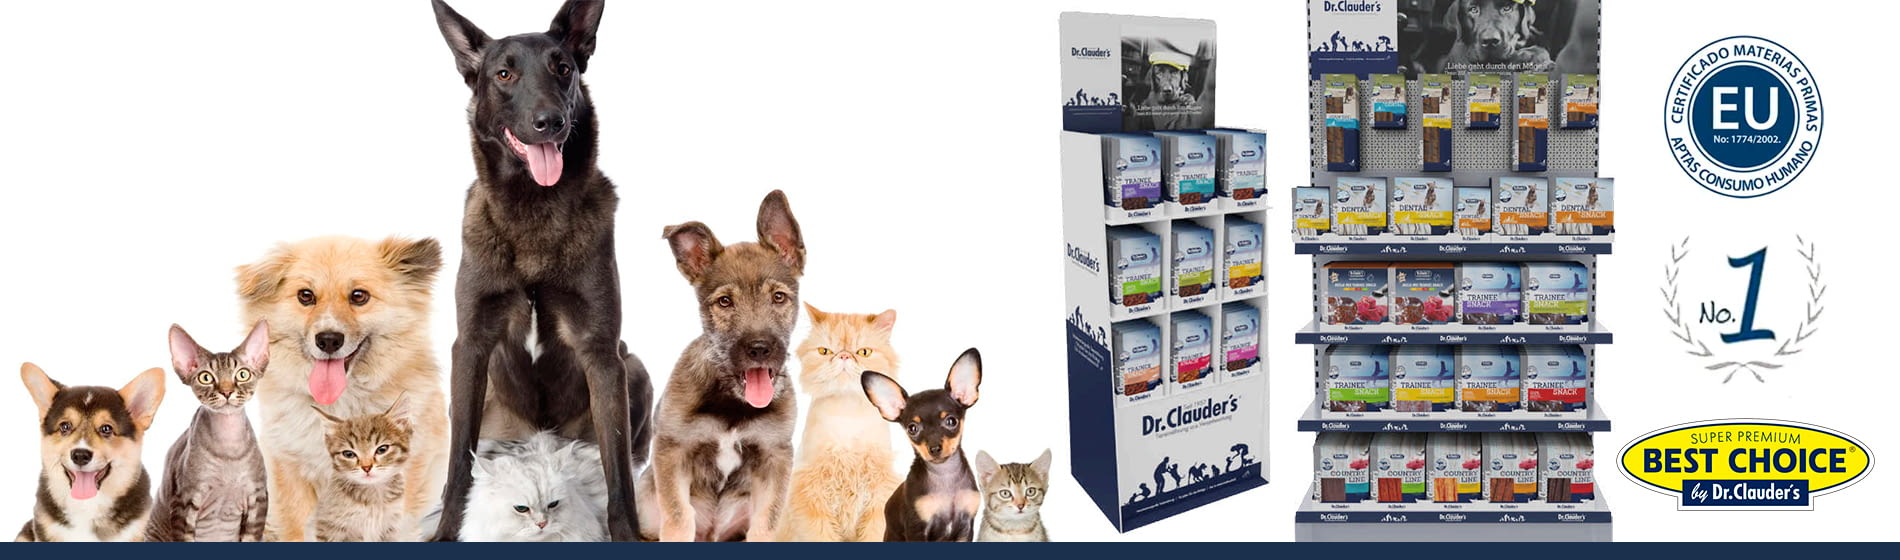 Calidad catálogos productos mascotas Dr.Clauder's